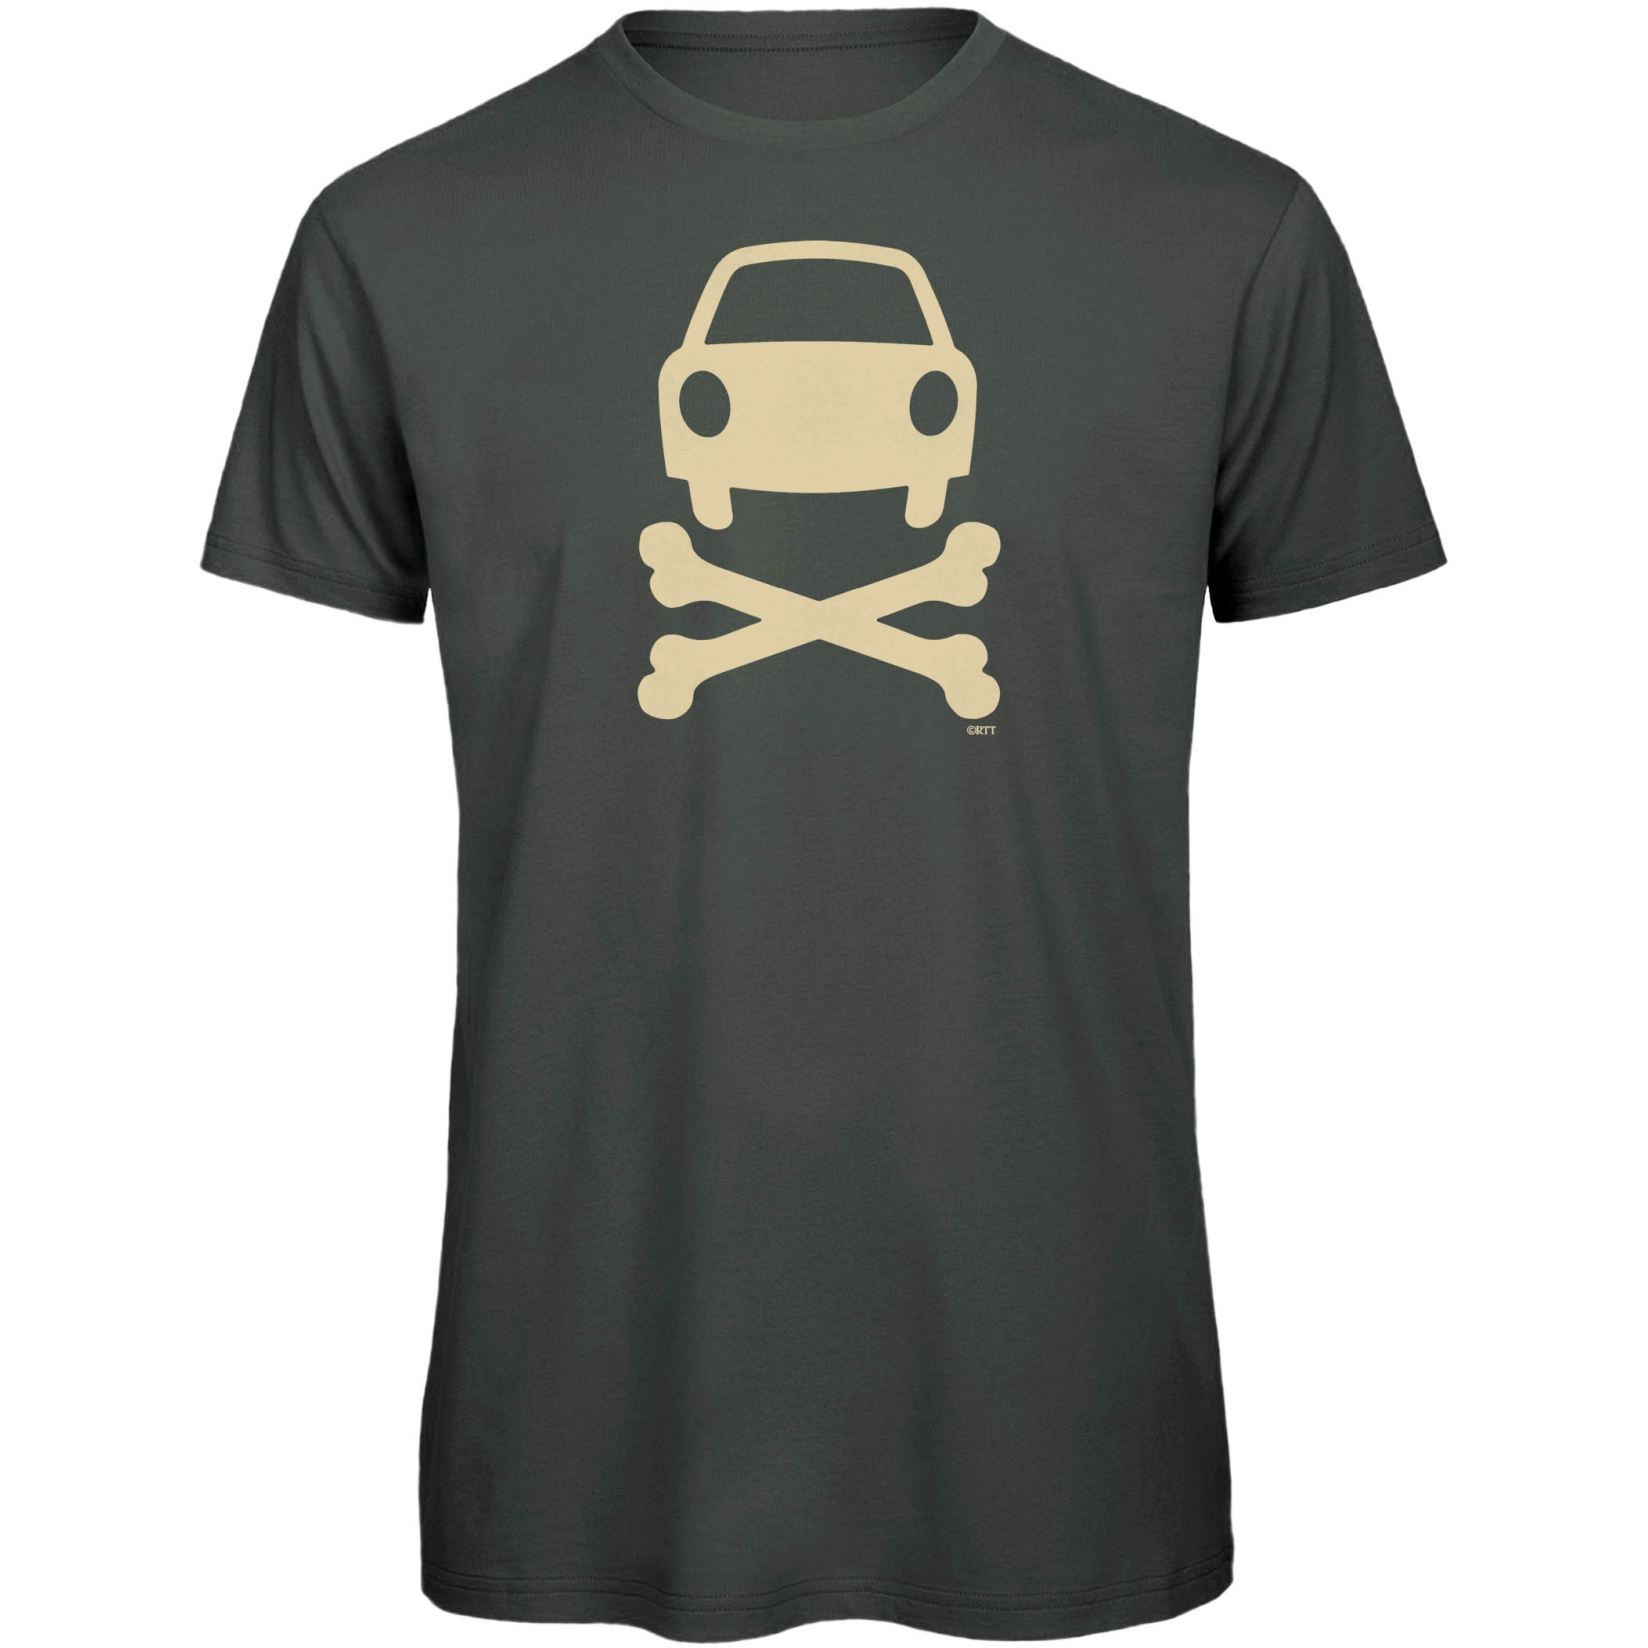 Imagen de RTTshirts Camiseta Bicicleta - No Car - gris oscuro